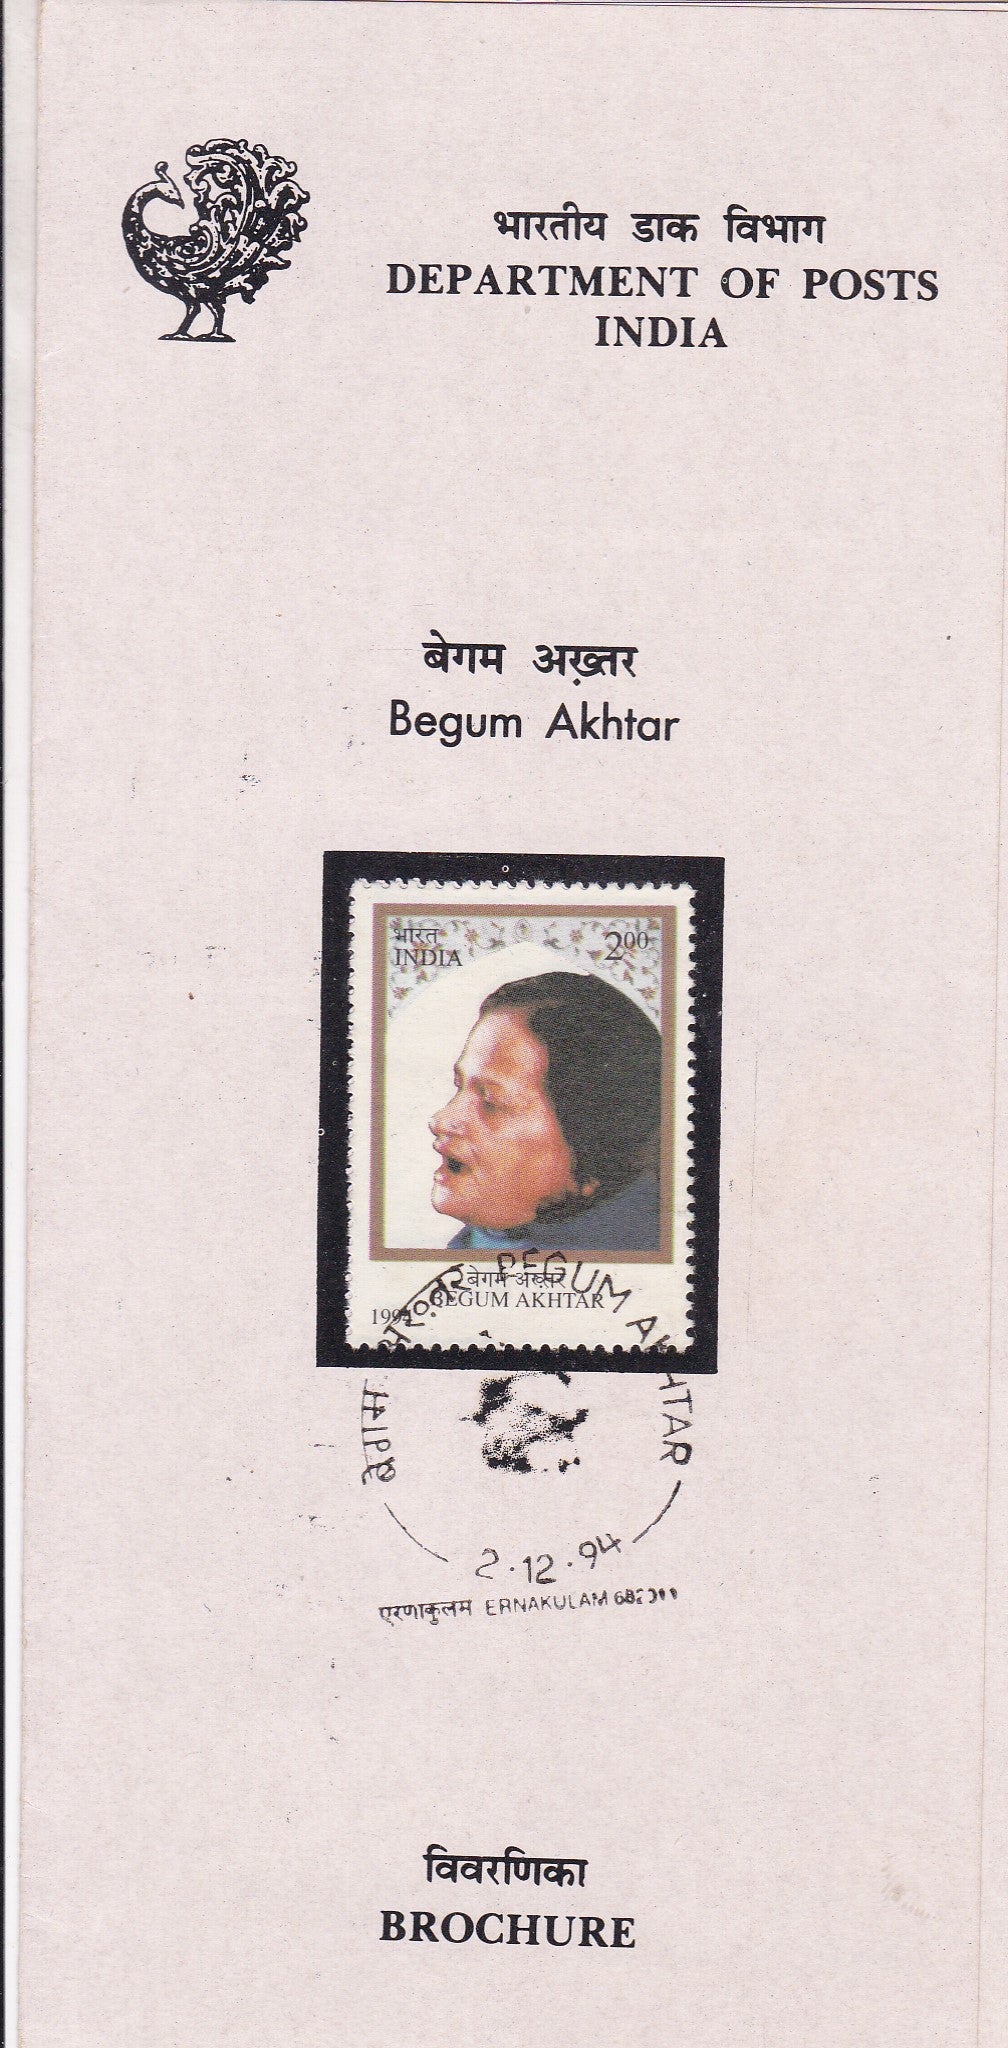 India-1994 withdrawn Begum Akthar brochure-error due stamp printing error.